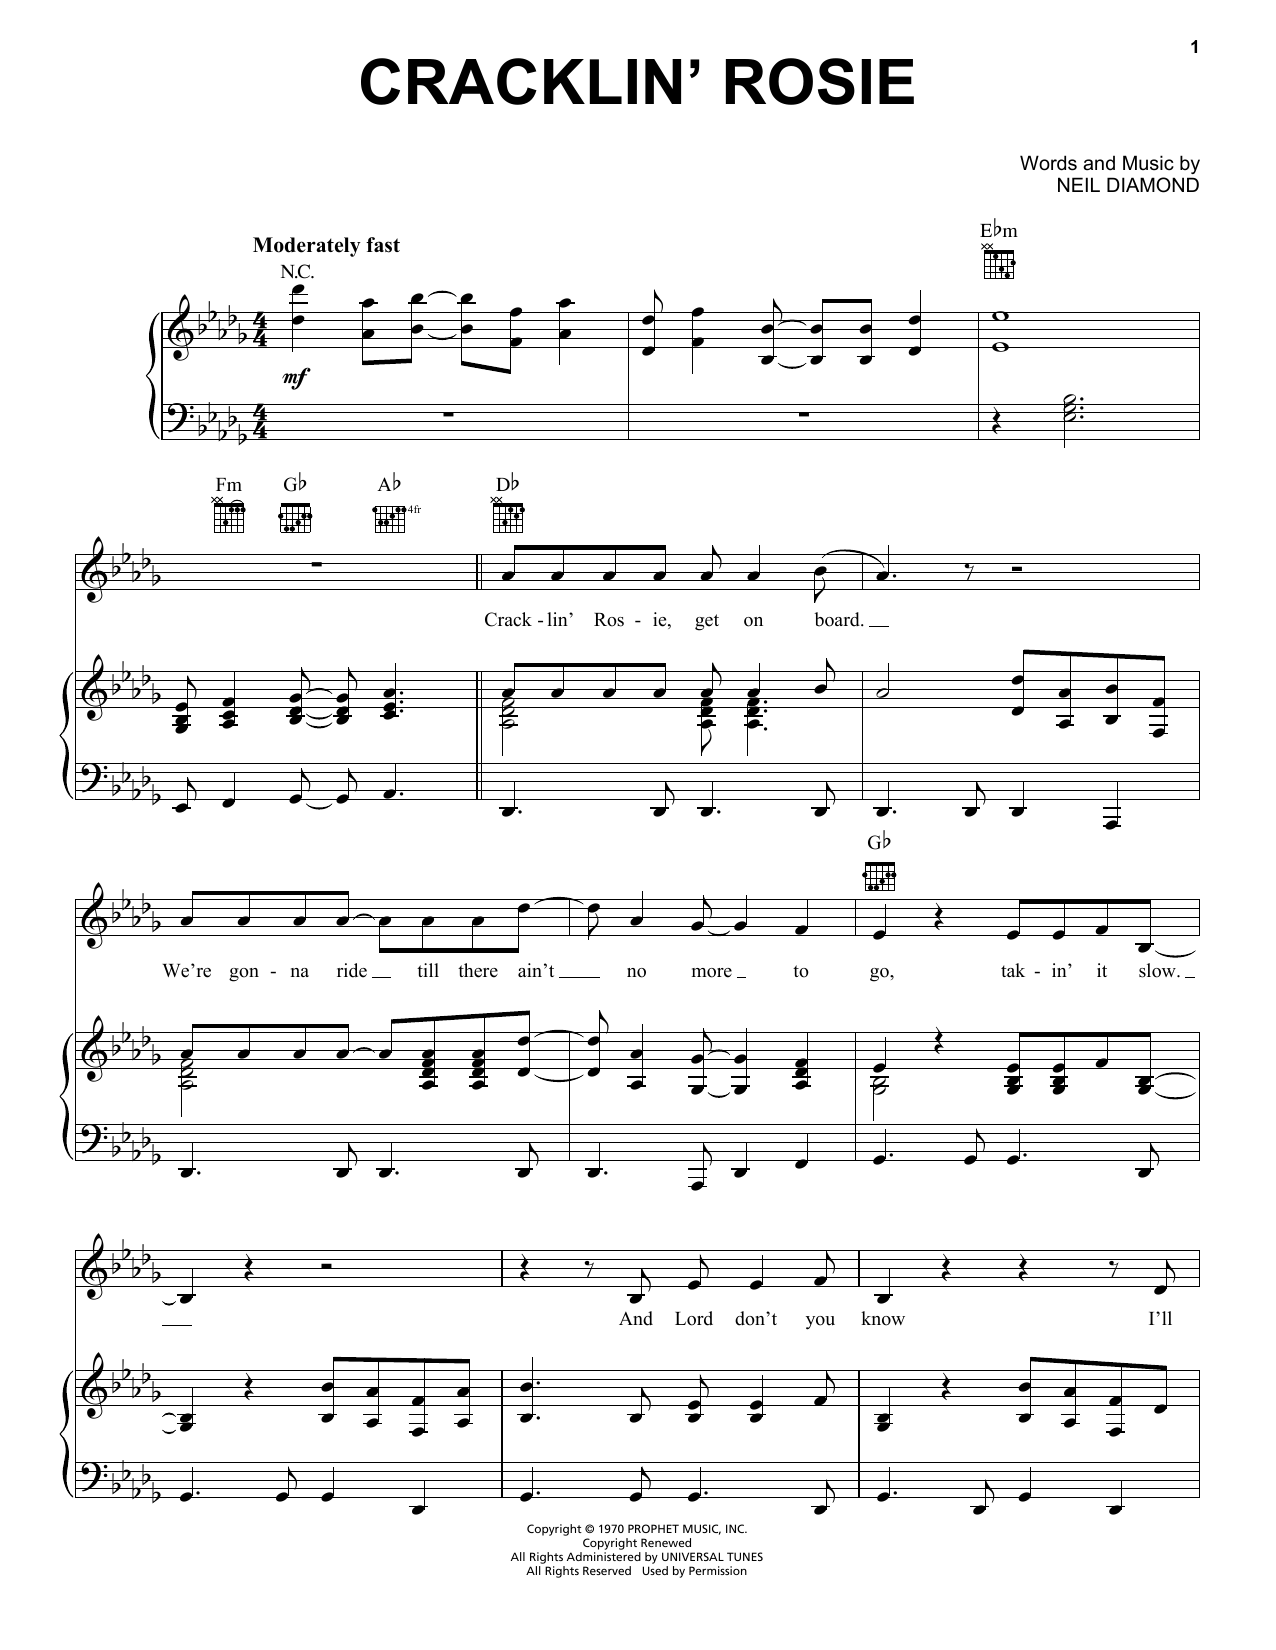 Neil Diamond Cracklin' Rosie sheet music notes printable PDF score